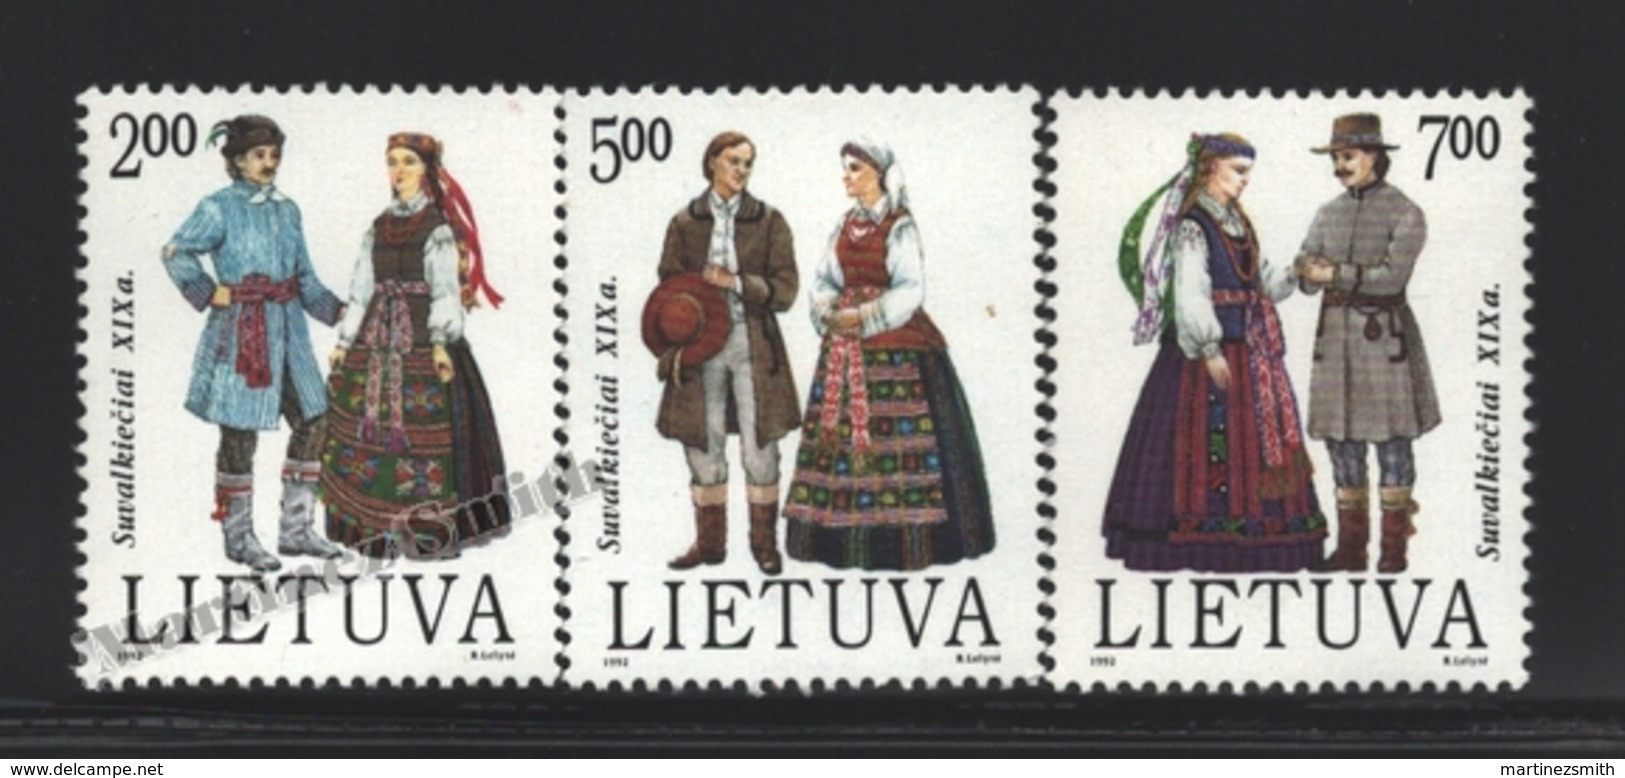 Lituanie – Lithuania – Lituania 1992 Yvert 439-41, Regional Traditional Costumes (I) - MNH - Lithuania